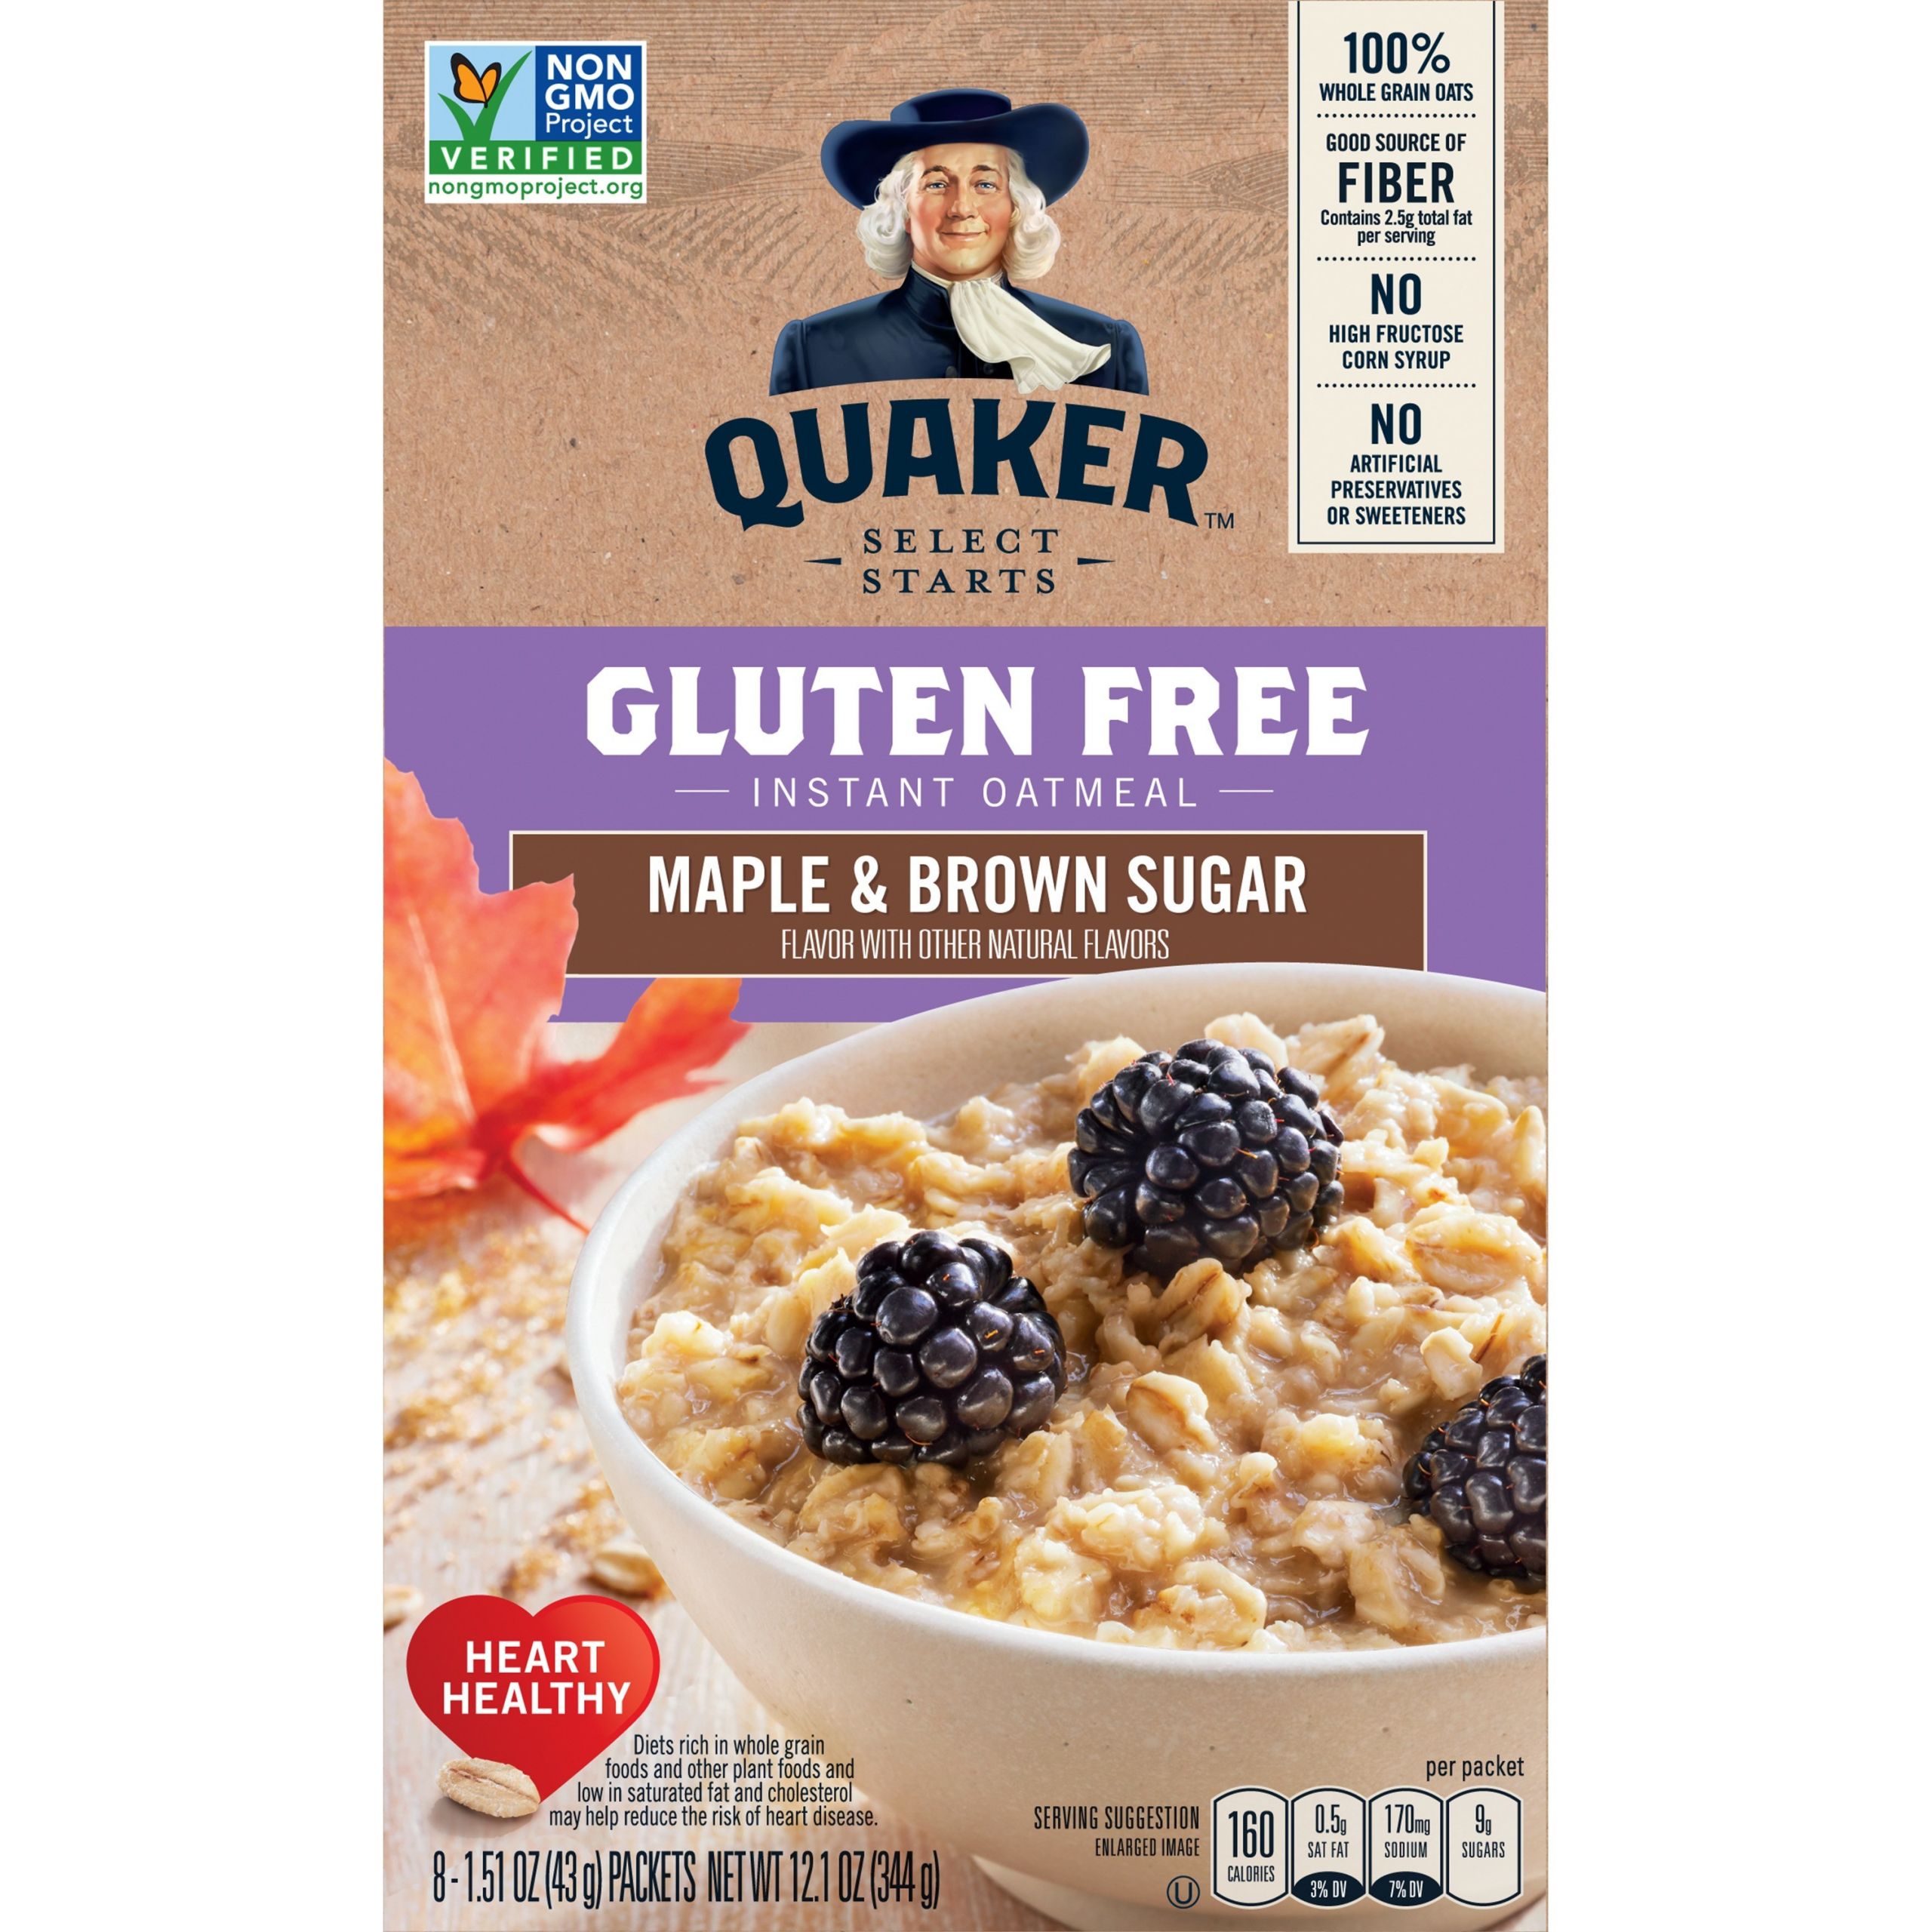 Gluten Free Quaker Oats
 Quaker Instant Oatmeal Gluten Free Maple Brown Sugar 8